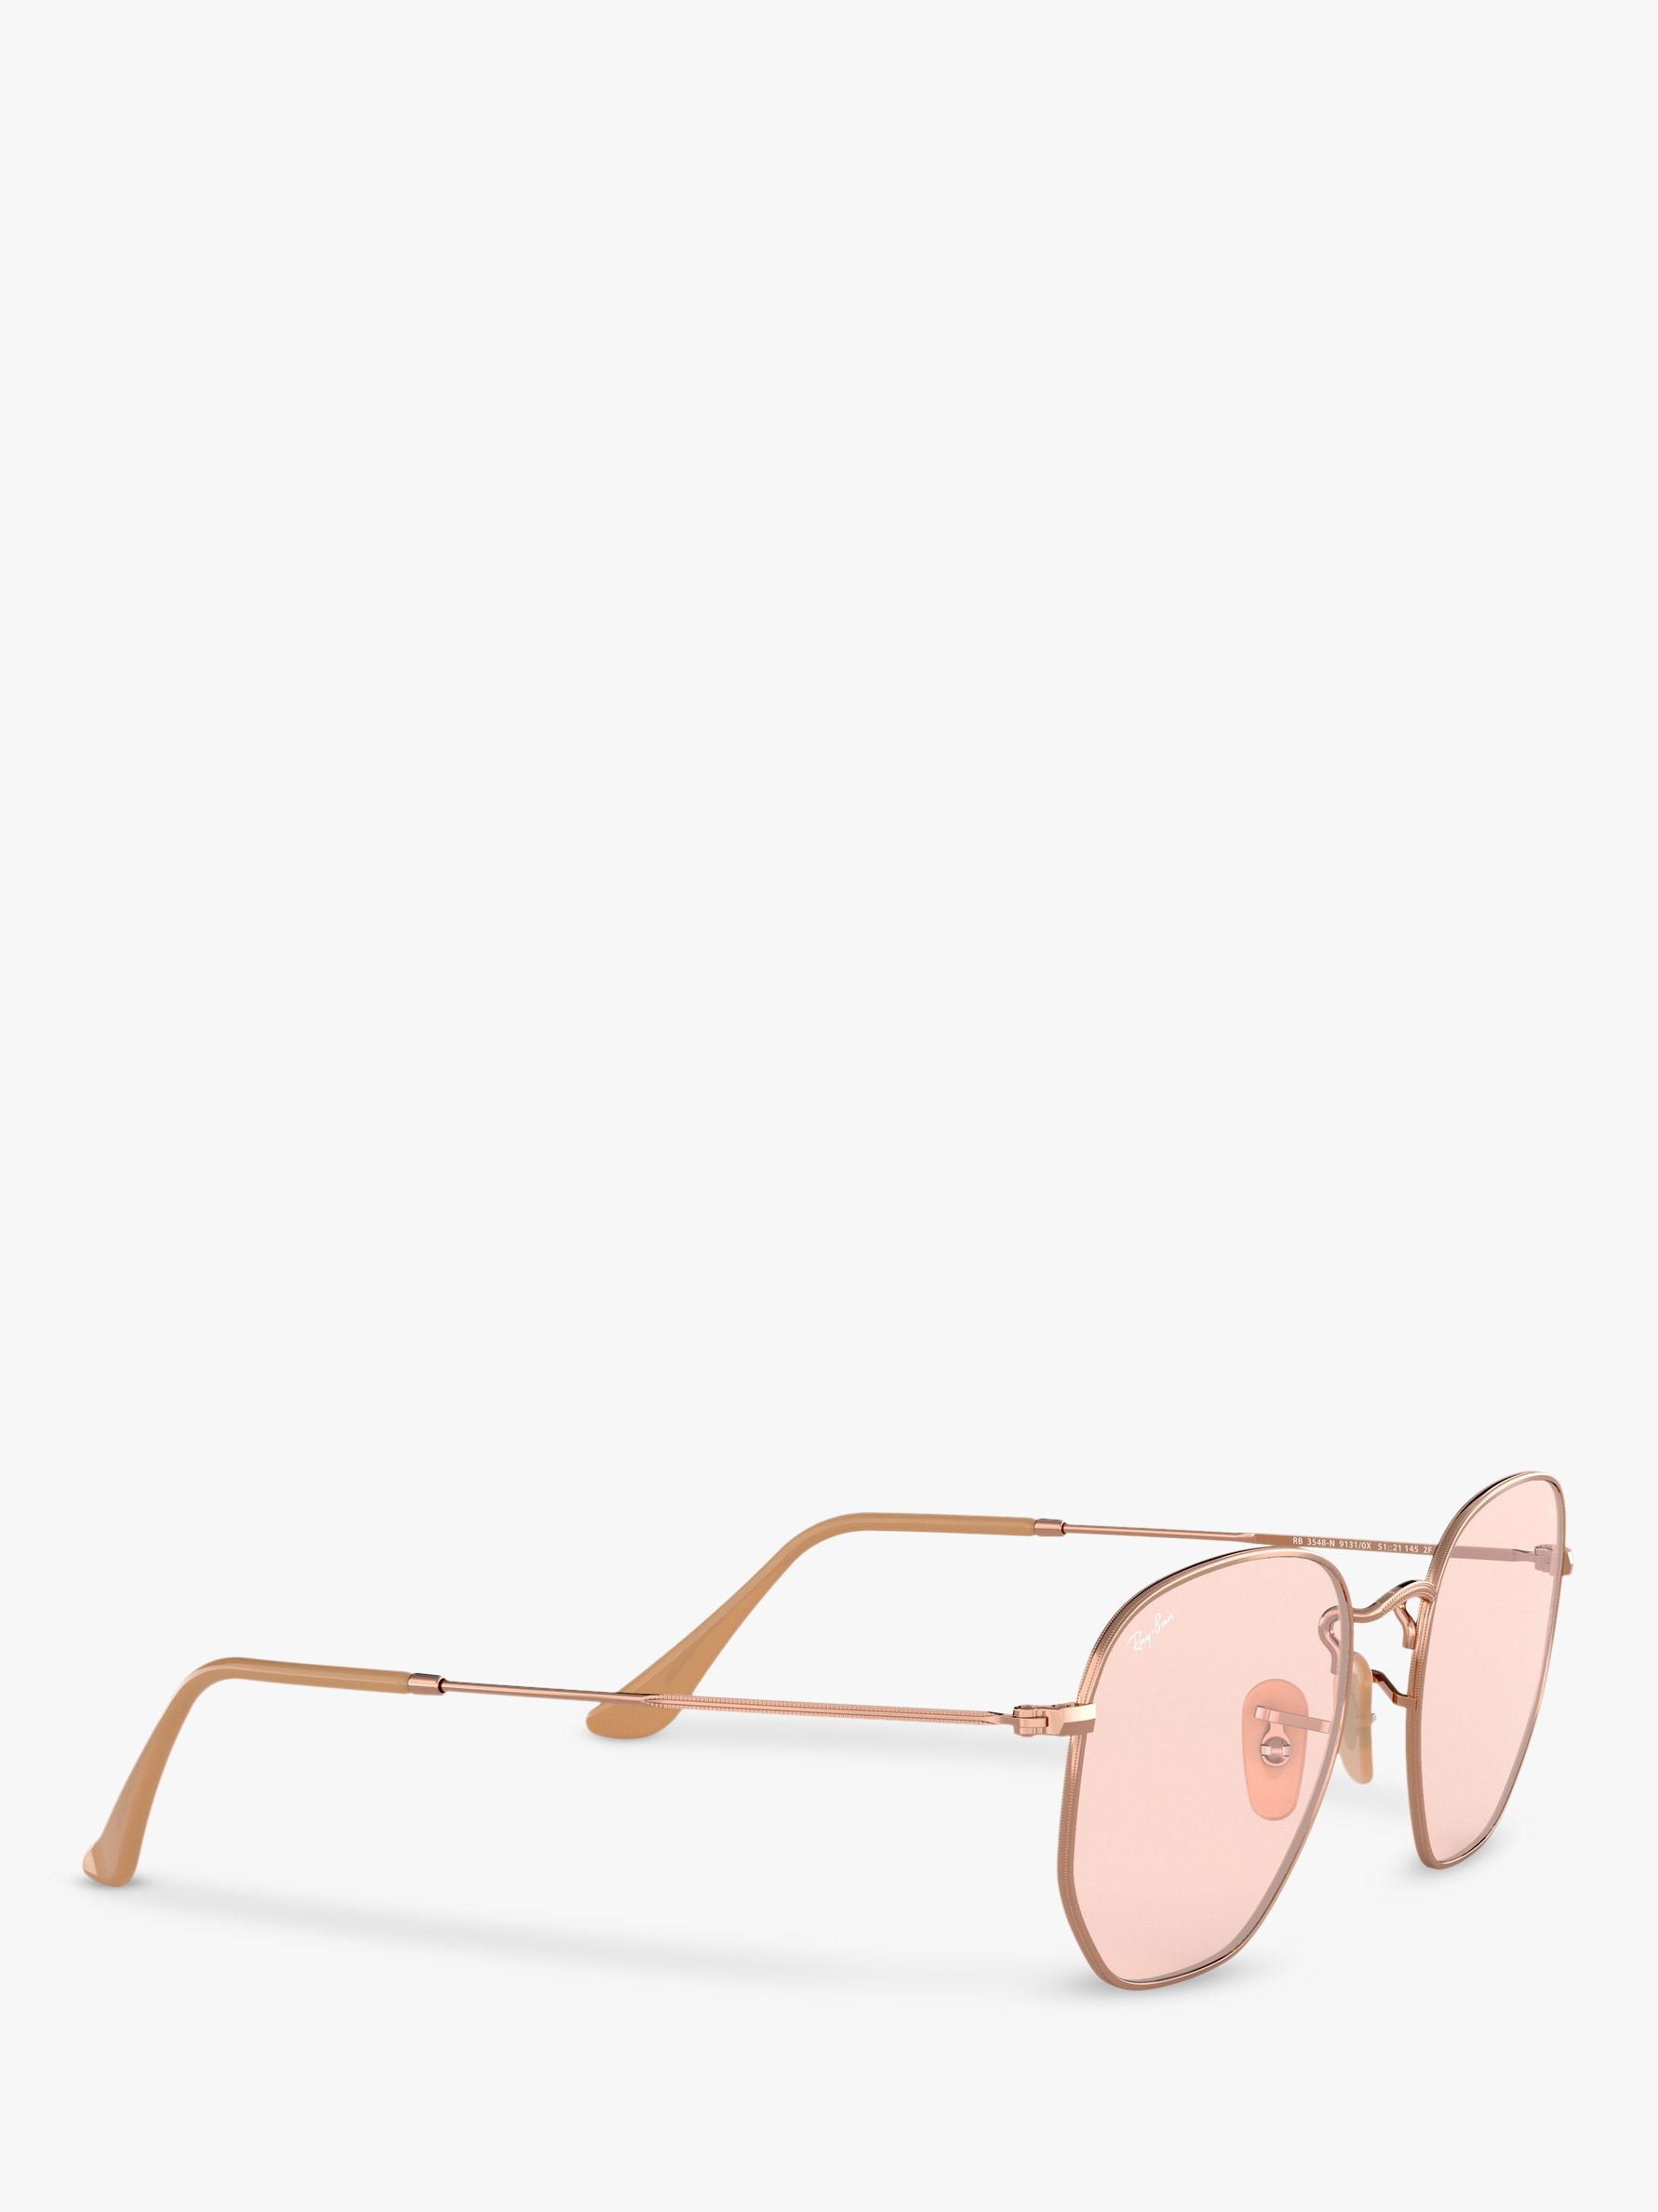 Ray-Ban RB3548N Hexgonal Sunglasses, Copper/Pink at John Lewis & Partners